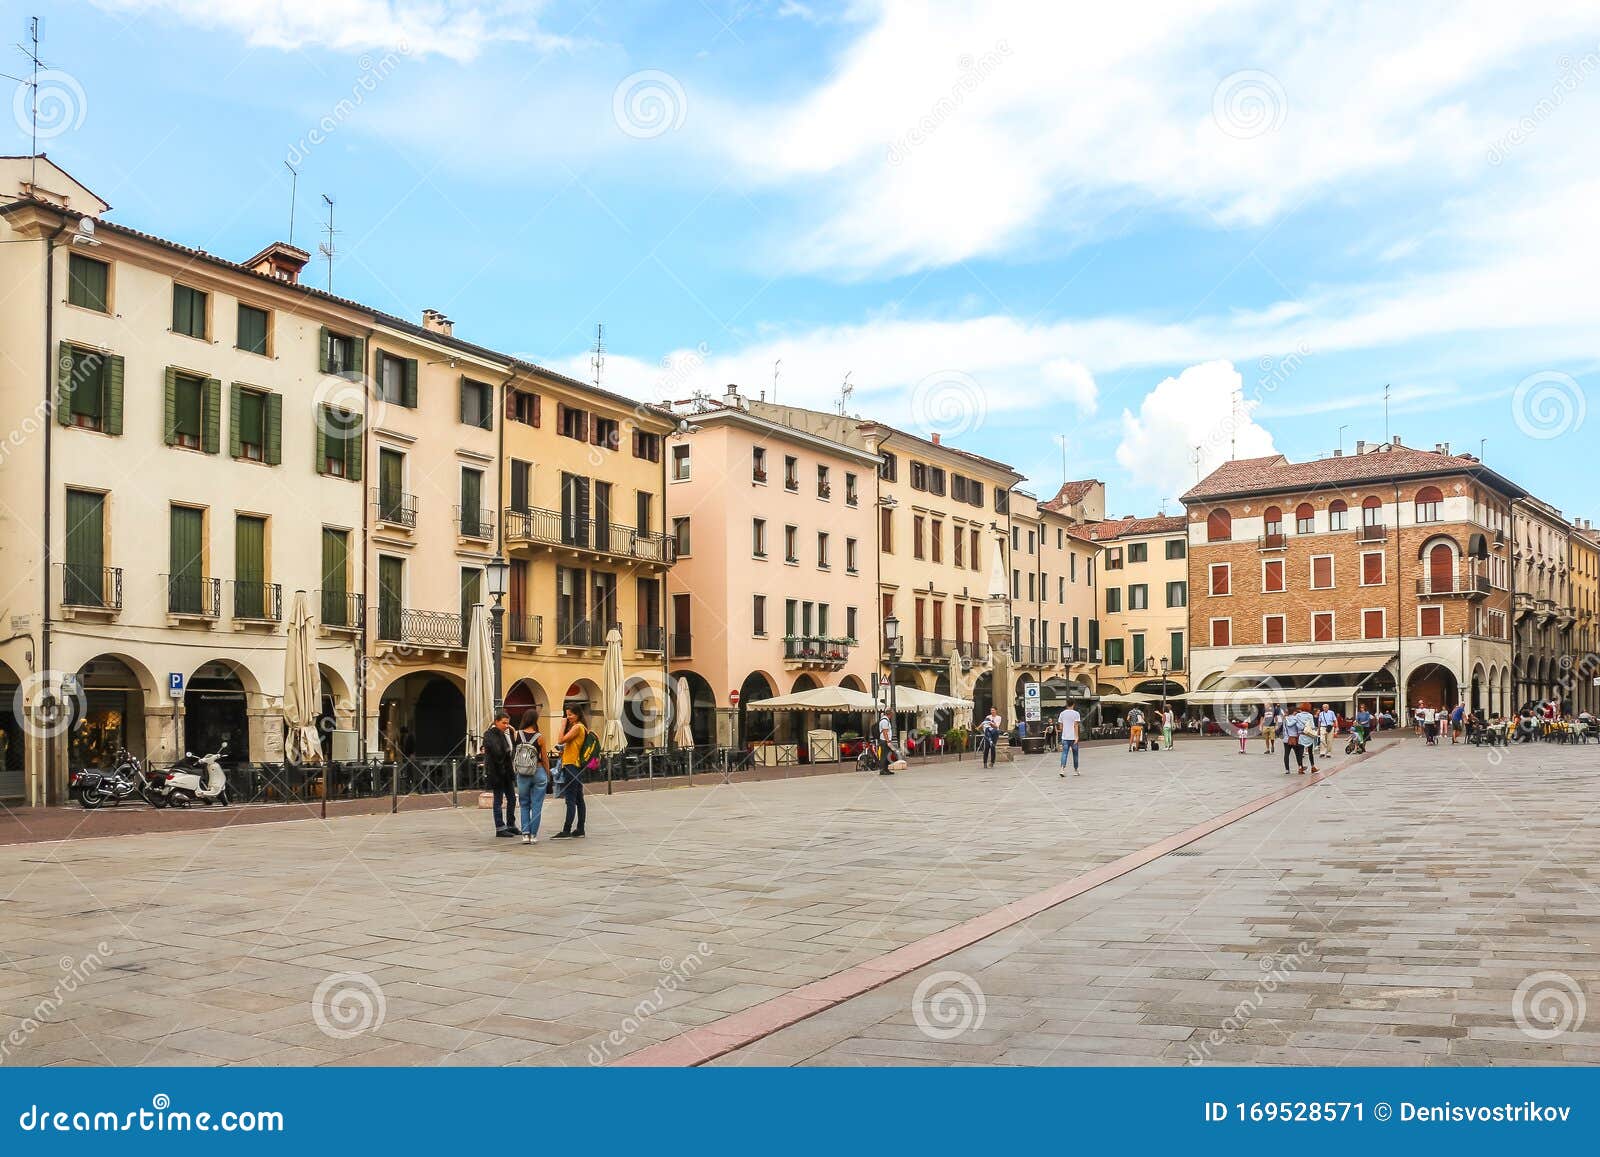 View of Piazza Delle Erbe in Padova Editorial Photo - Image of ...